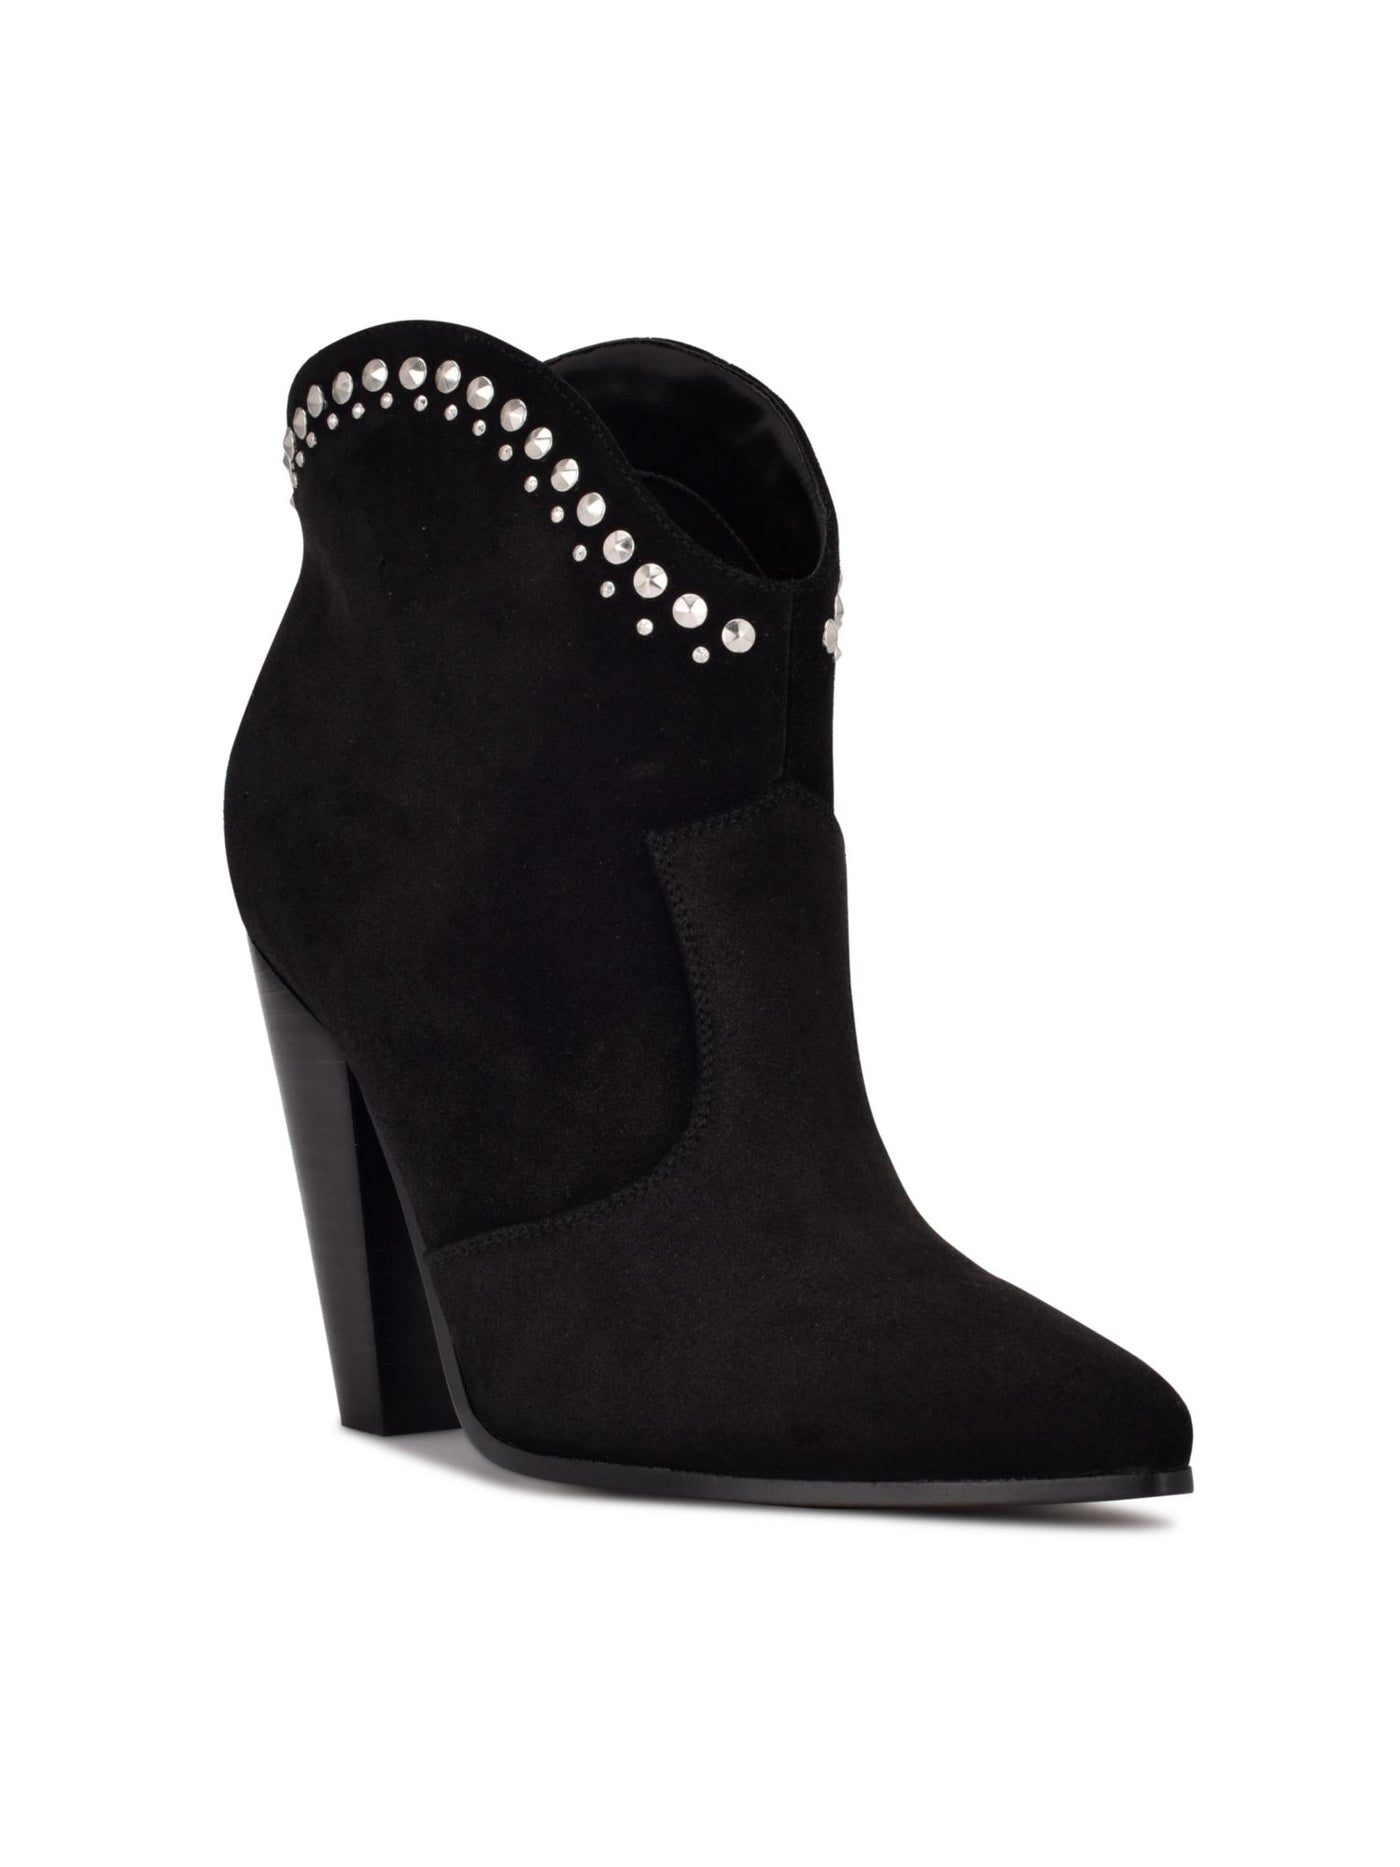 NINE WEST Womens Black Embellished Sera Pointed Toe Block Heel Slip On Leather Dress Booties 10.5 M